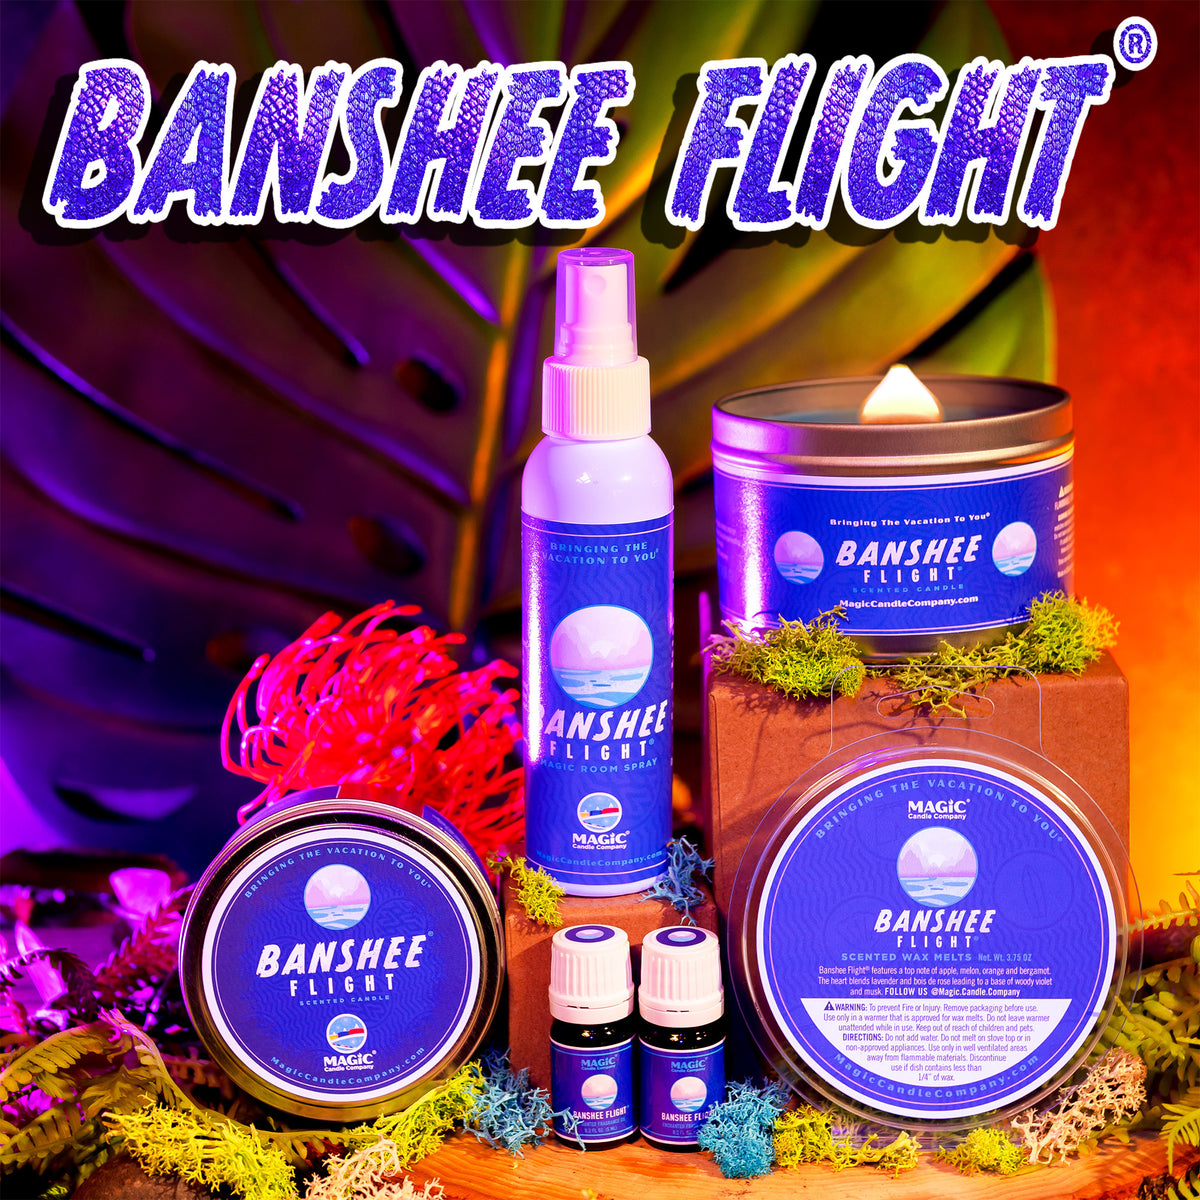 Banshee Flight fragrance